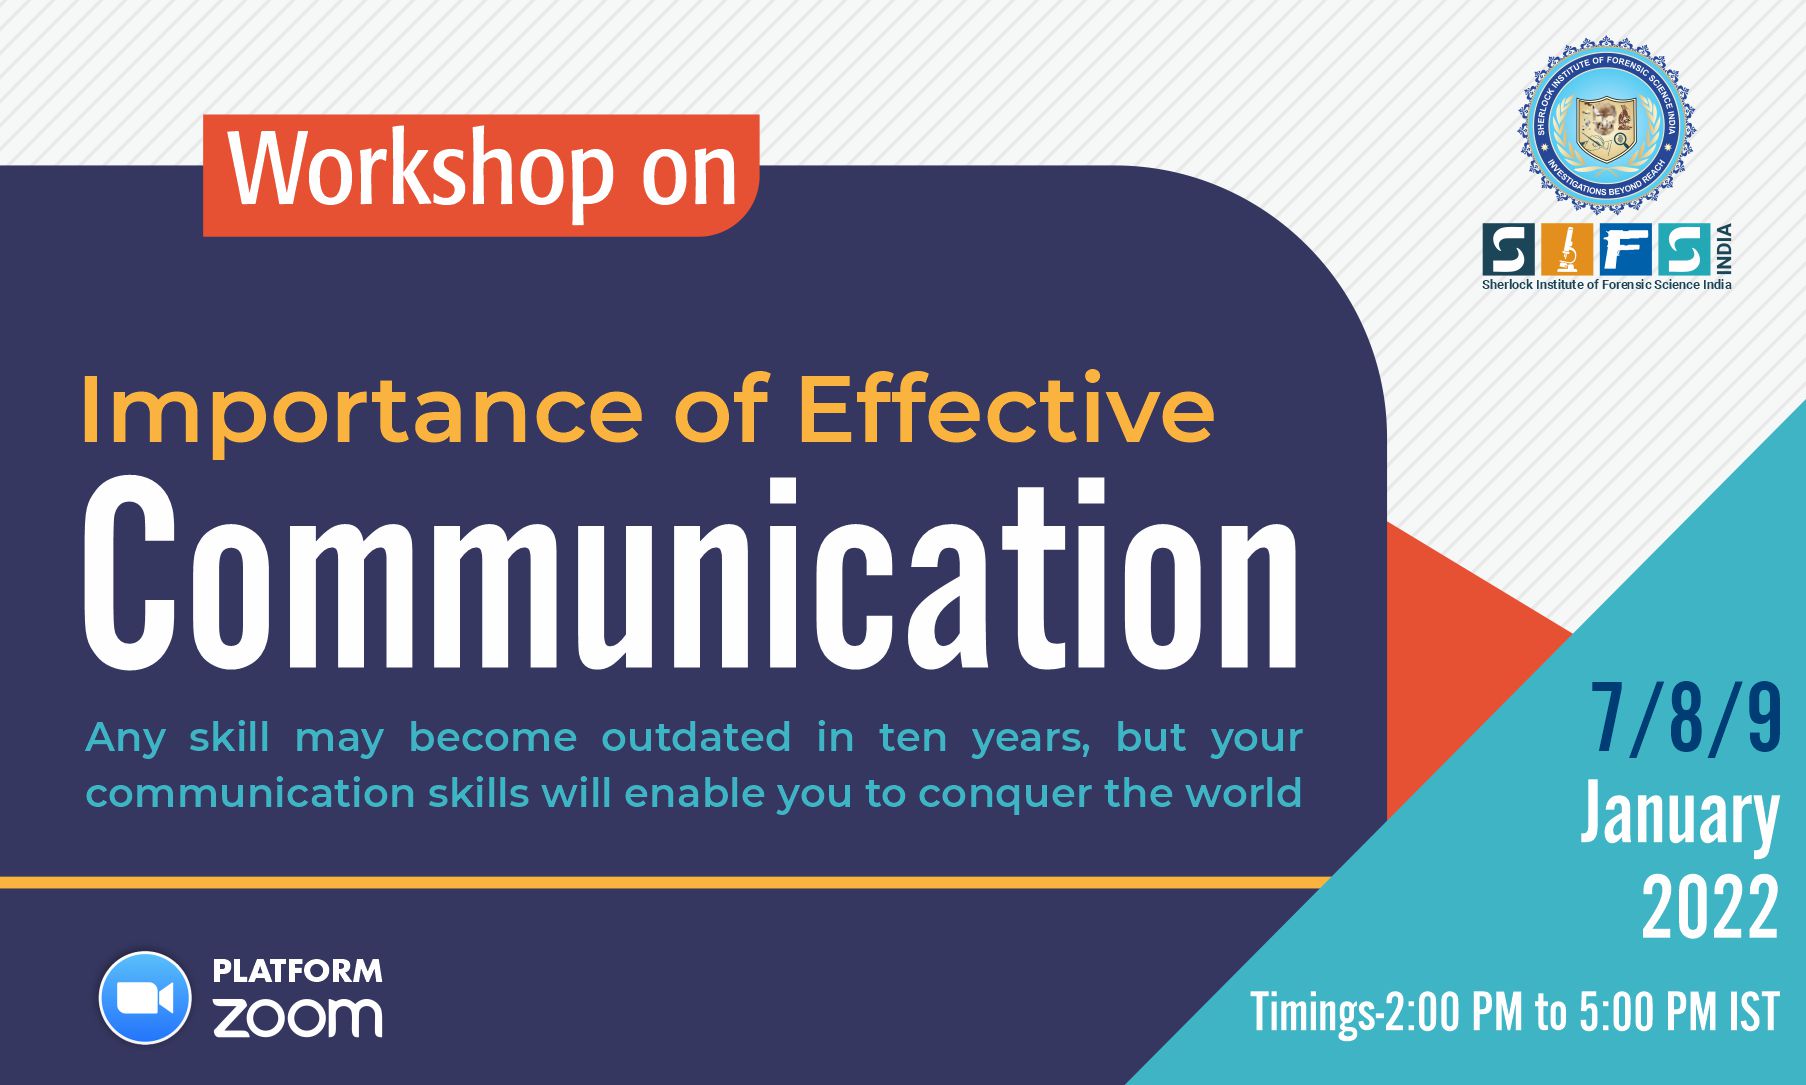 Workshop on Communication Skills